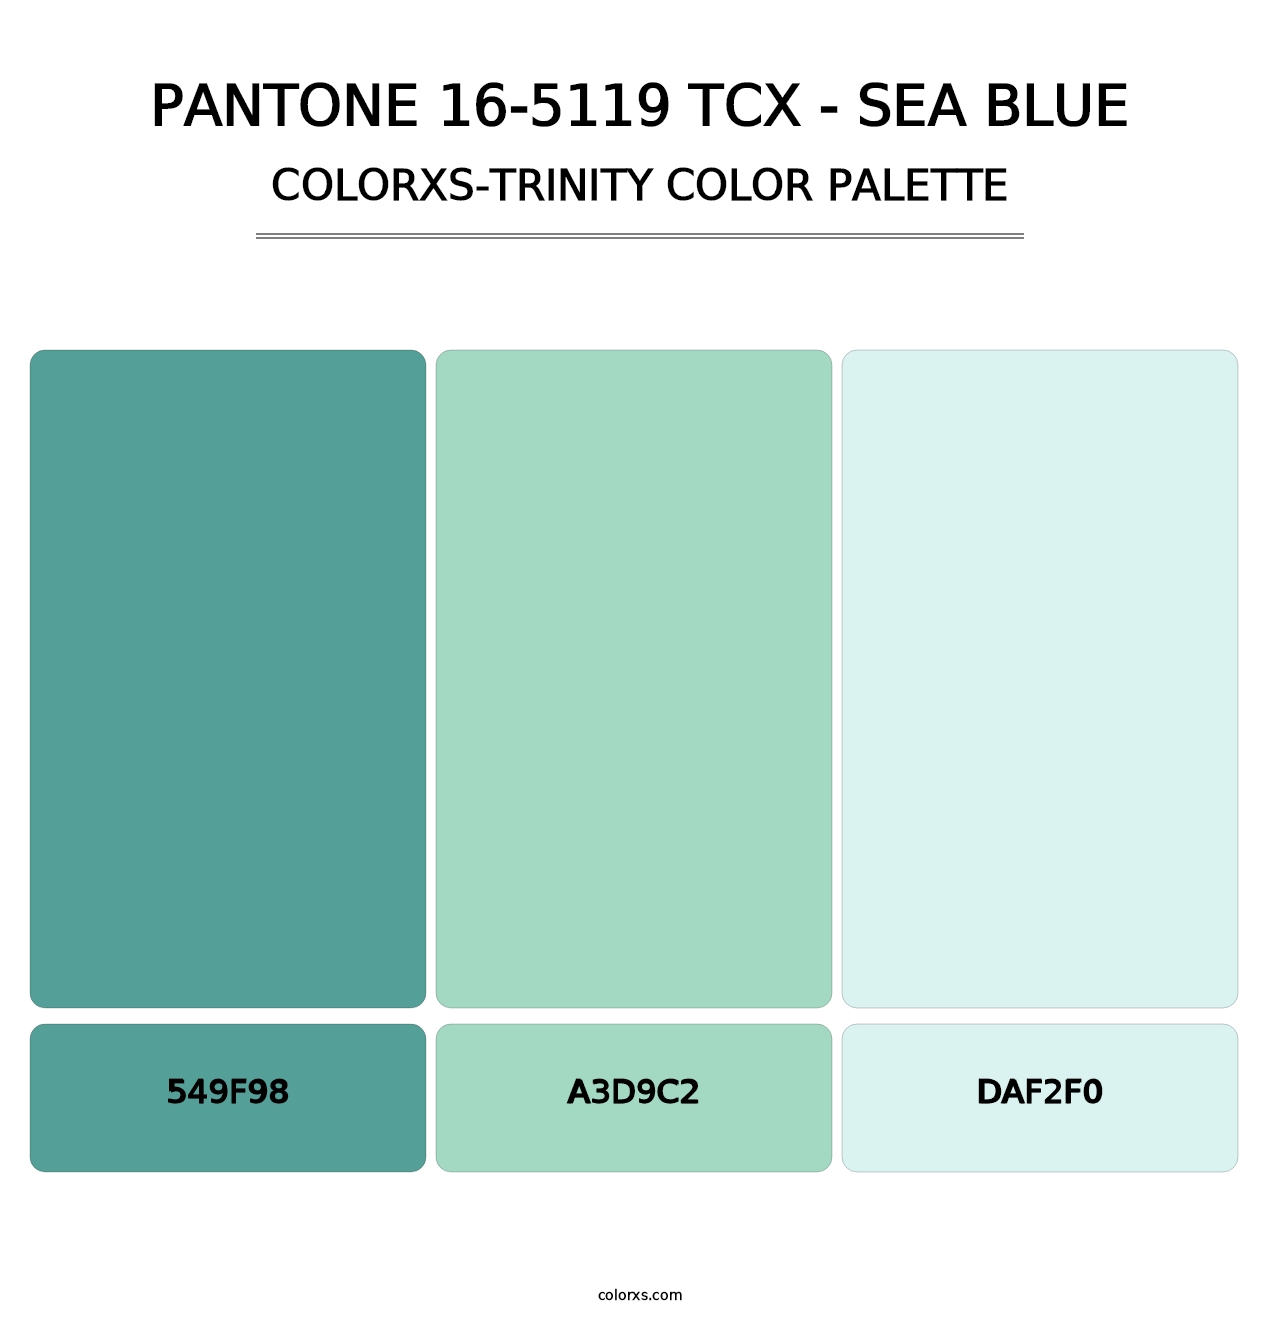 PANTONE 16-5119 TCX - Sea Blue - Colorxs Trinity Palette